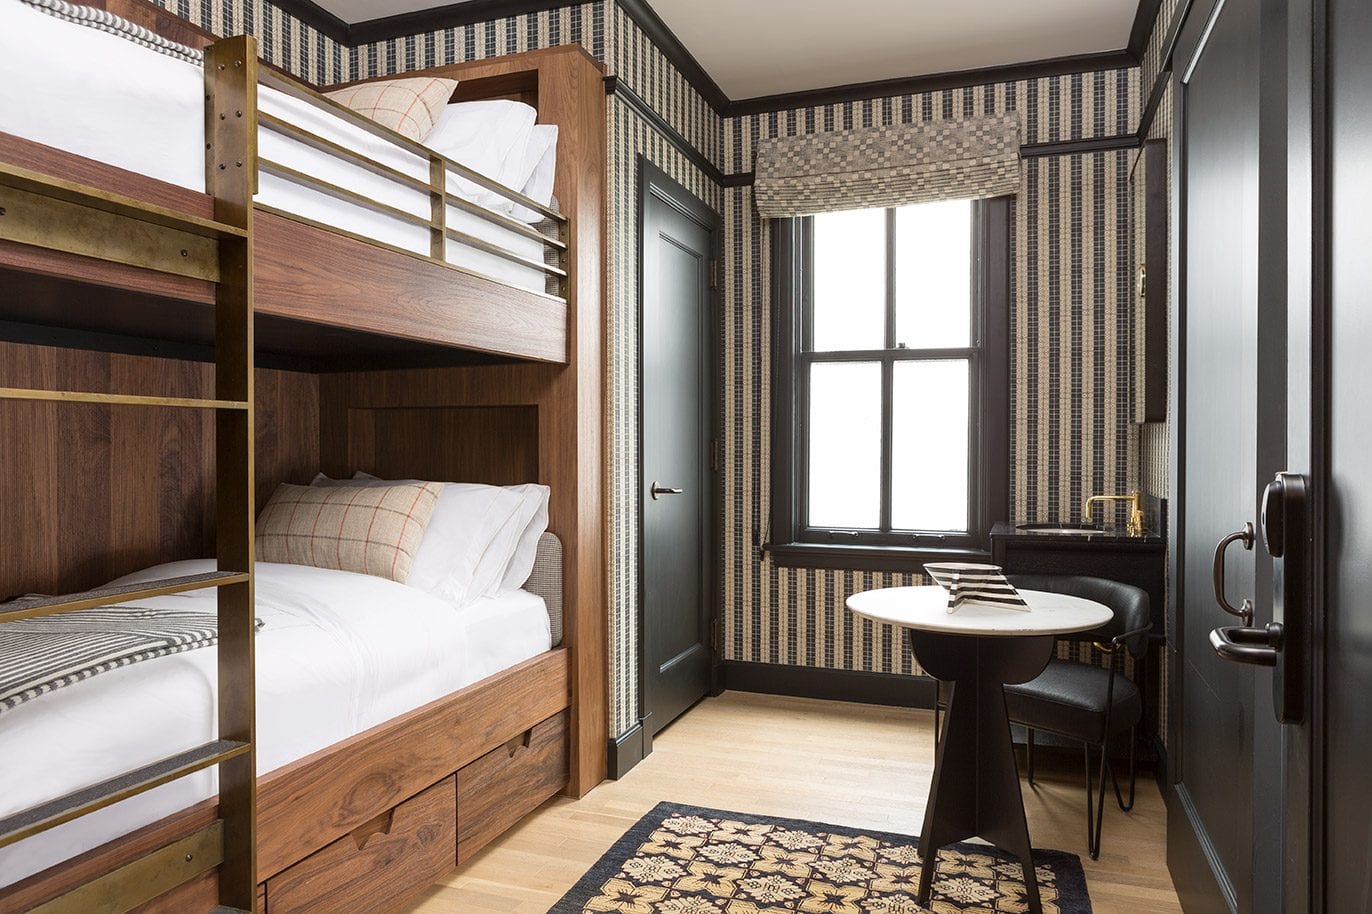 Bunk Bed Hotel Rooms in California | San Francisco Proper ...